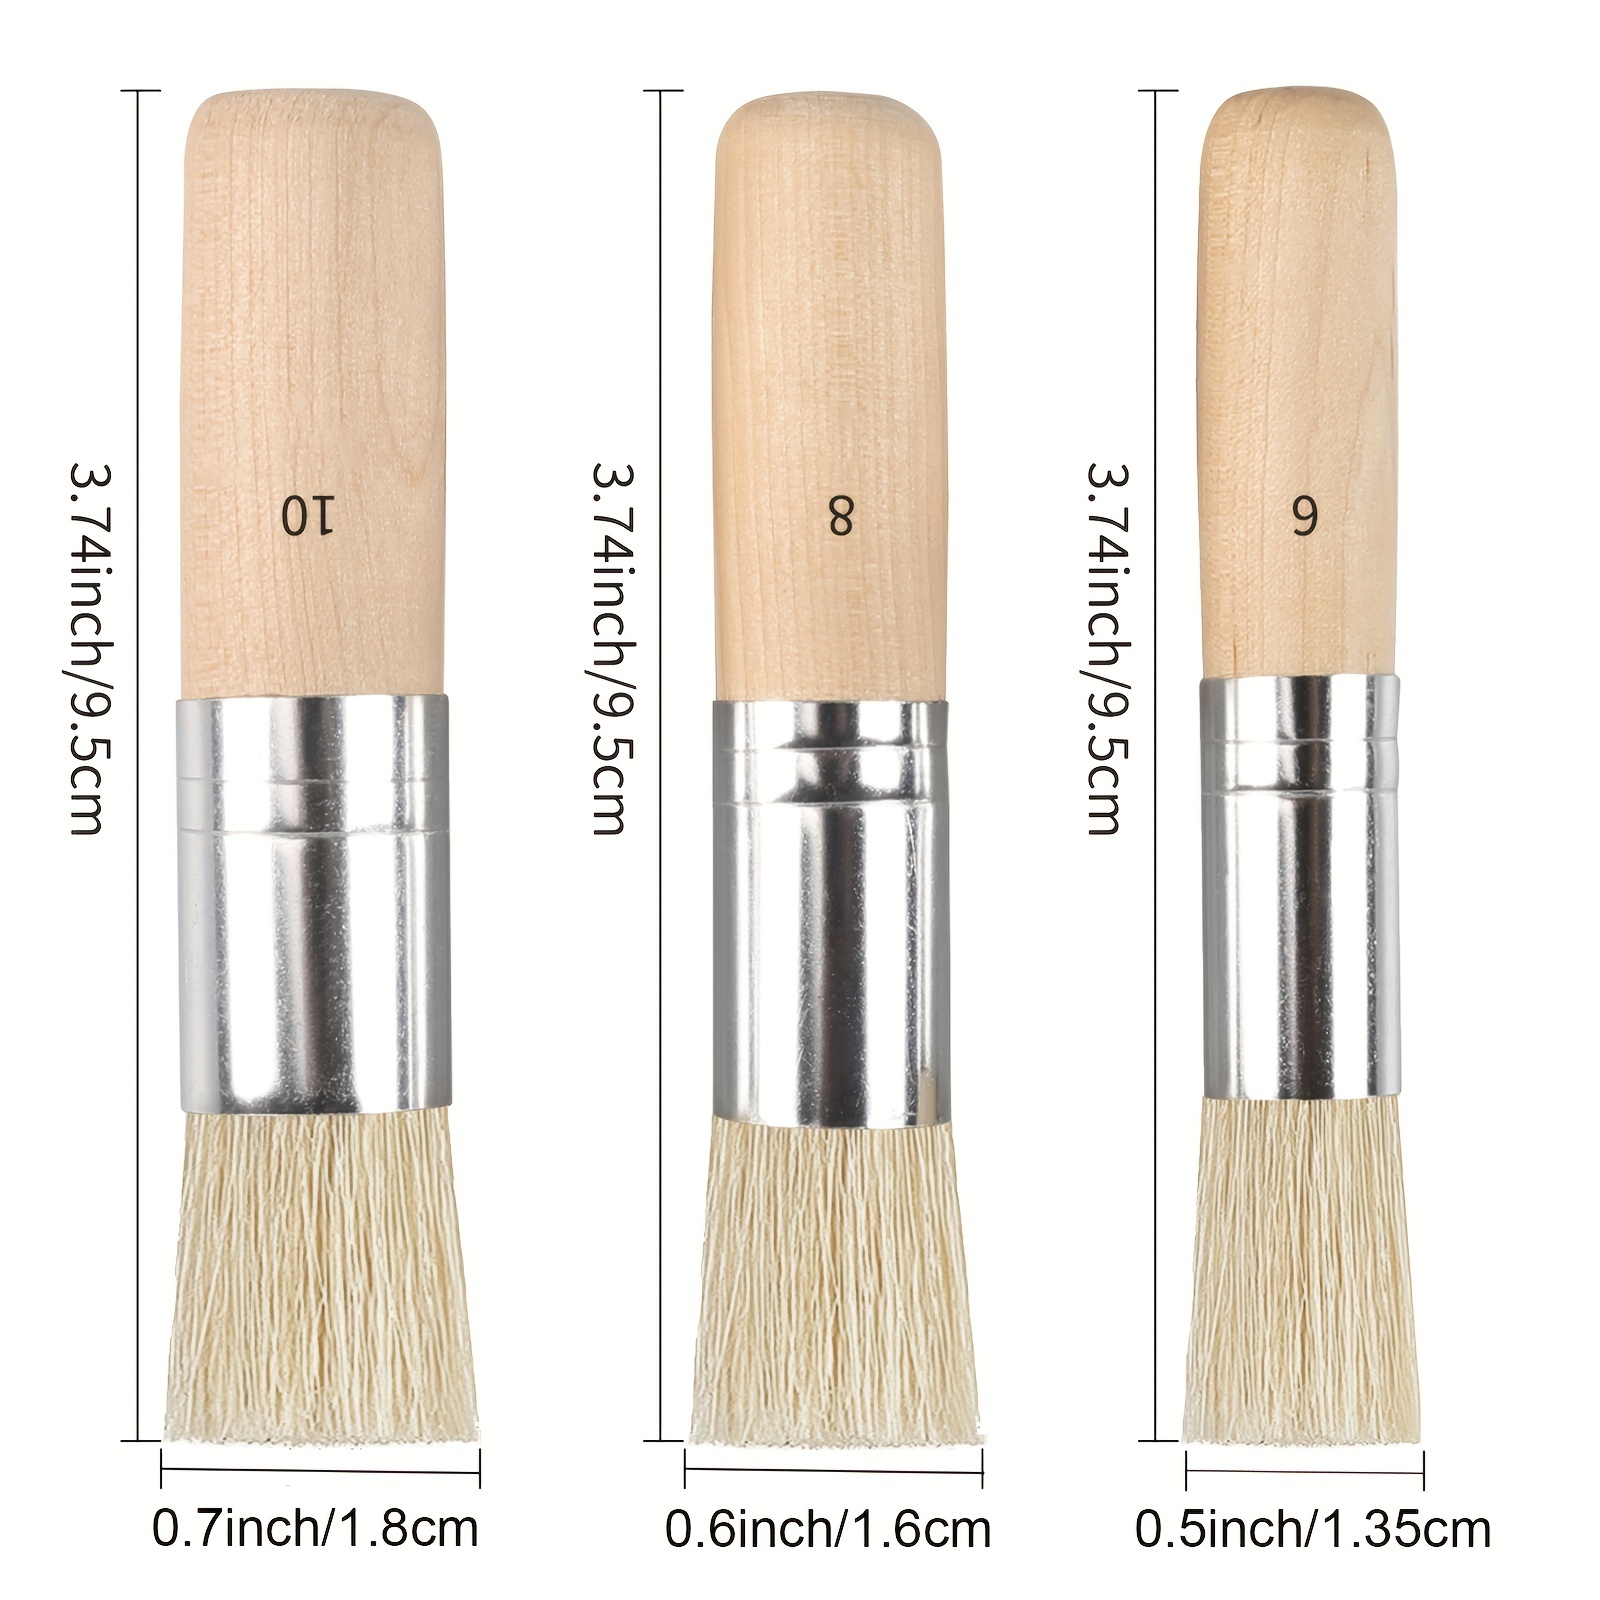 1SET/3PCS 6/8/10 Small Stencil Brushes Set,Wooden Stencil Brushes,Stencil  Brushes for Painting,Artist Natural Bristle Paint Brushes,0.48/0.70/0.76  Diameter 